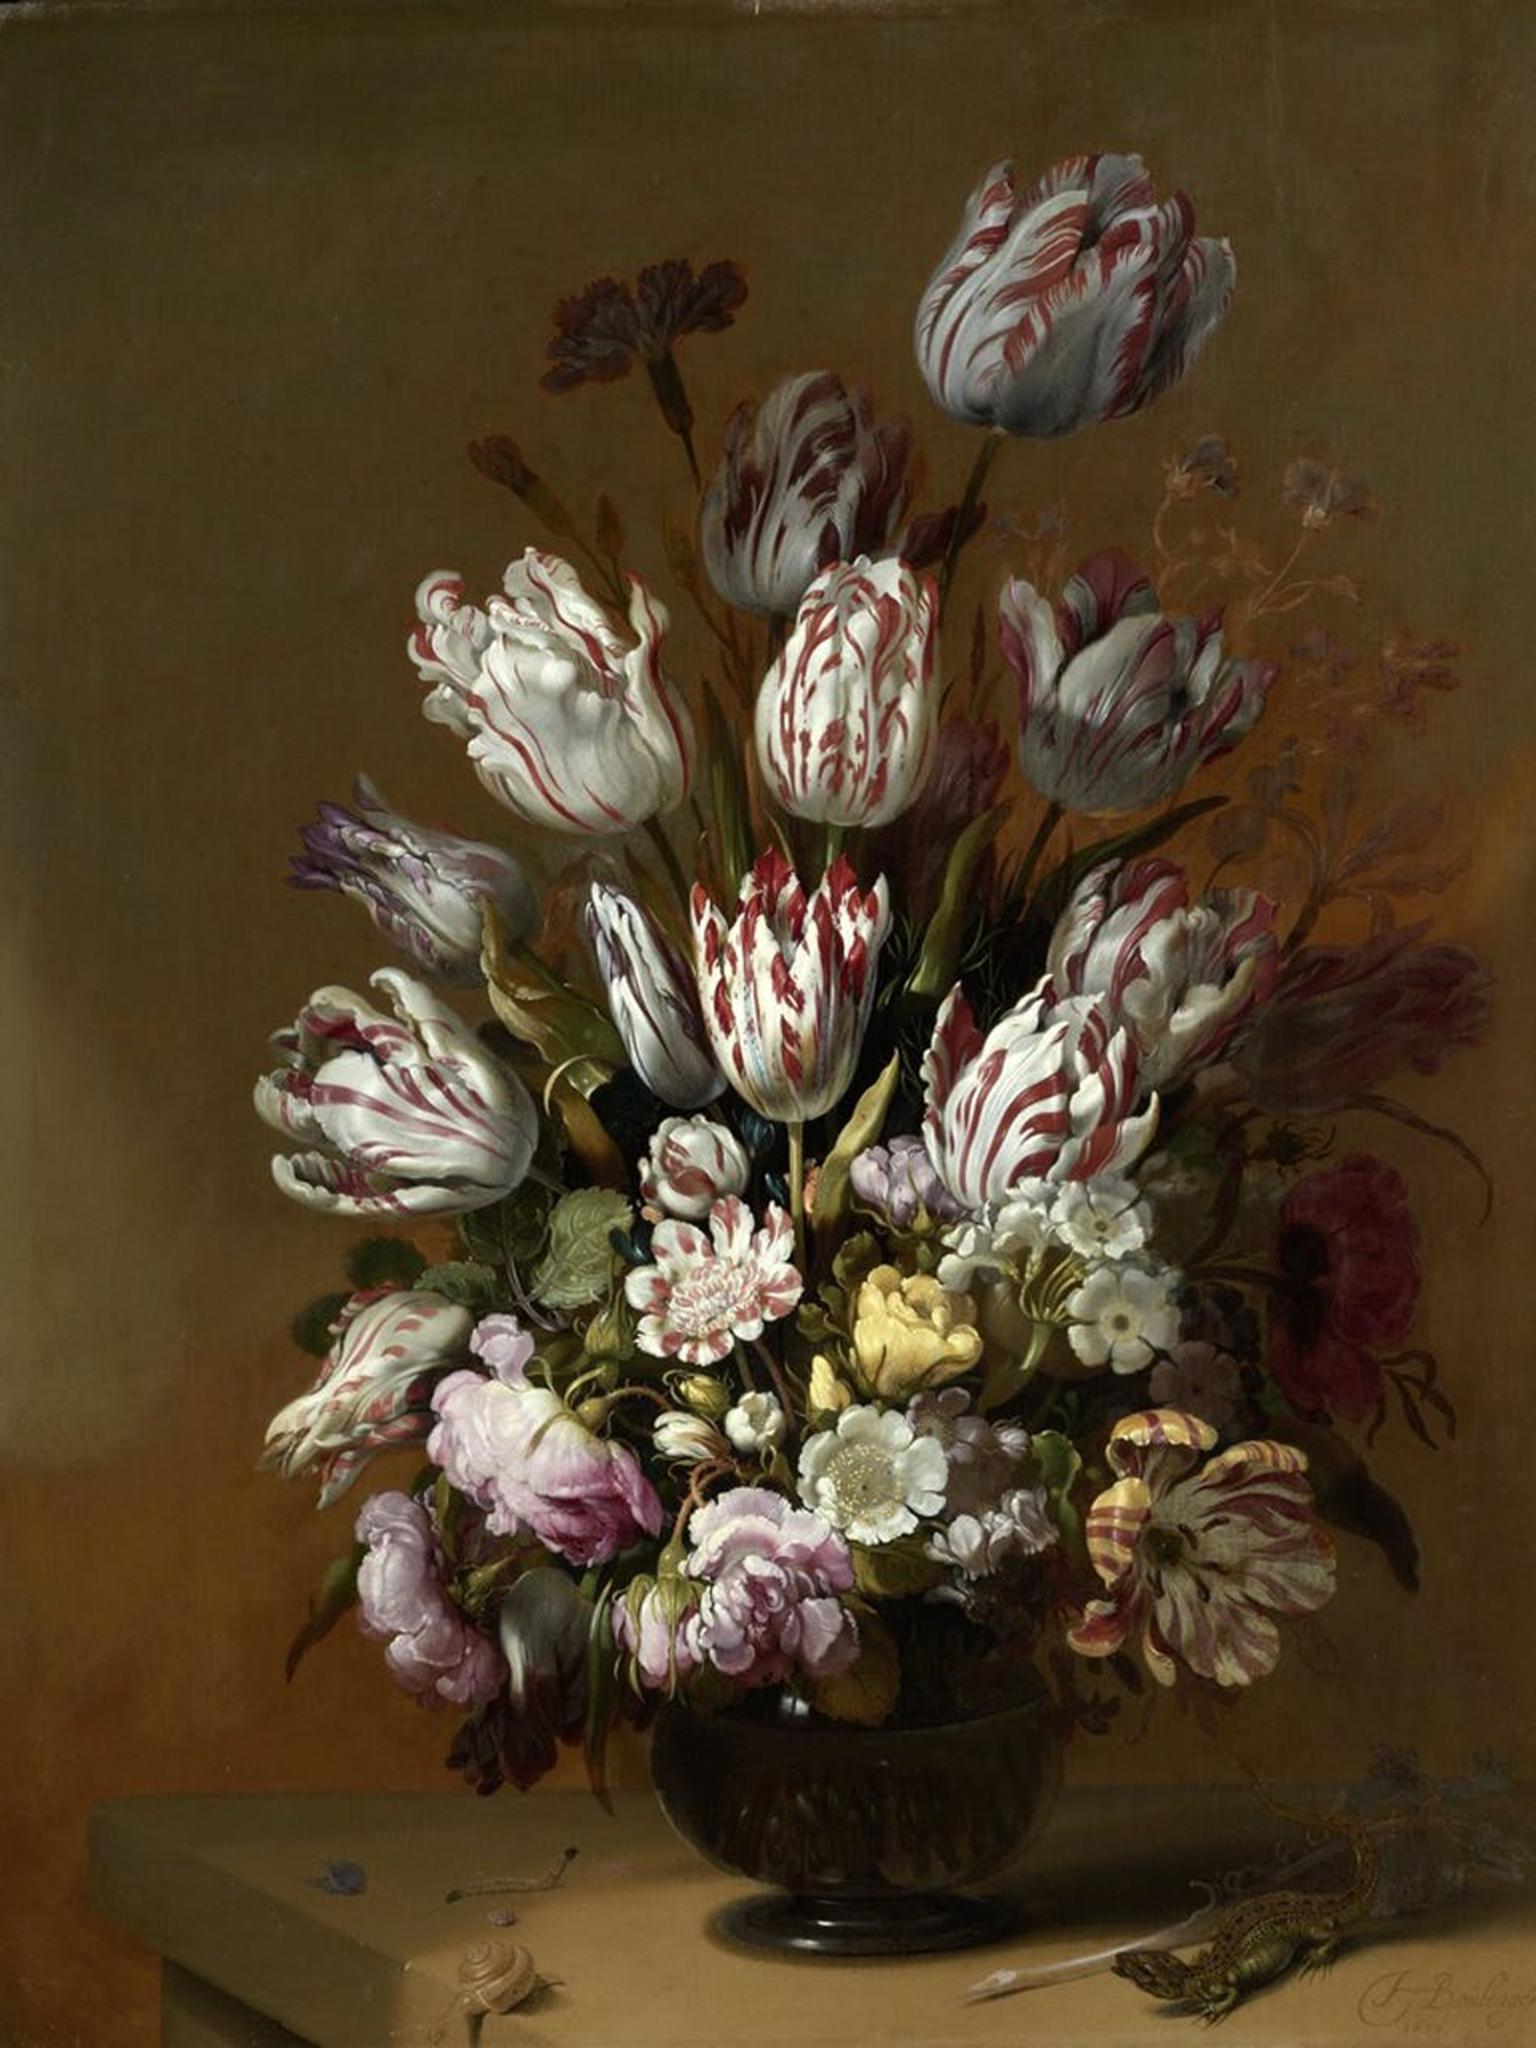 Patterned petals were very valuable. Hans Bollongier, ‘Floral Still Life’, 1639